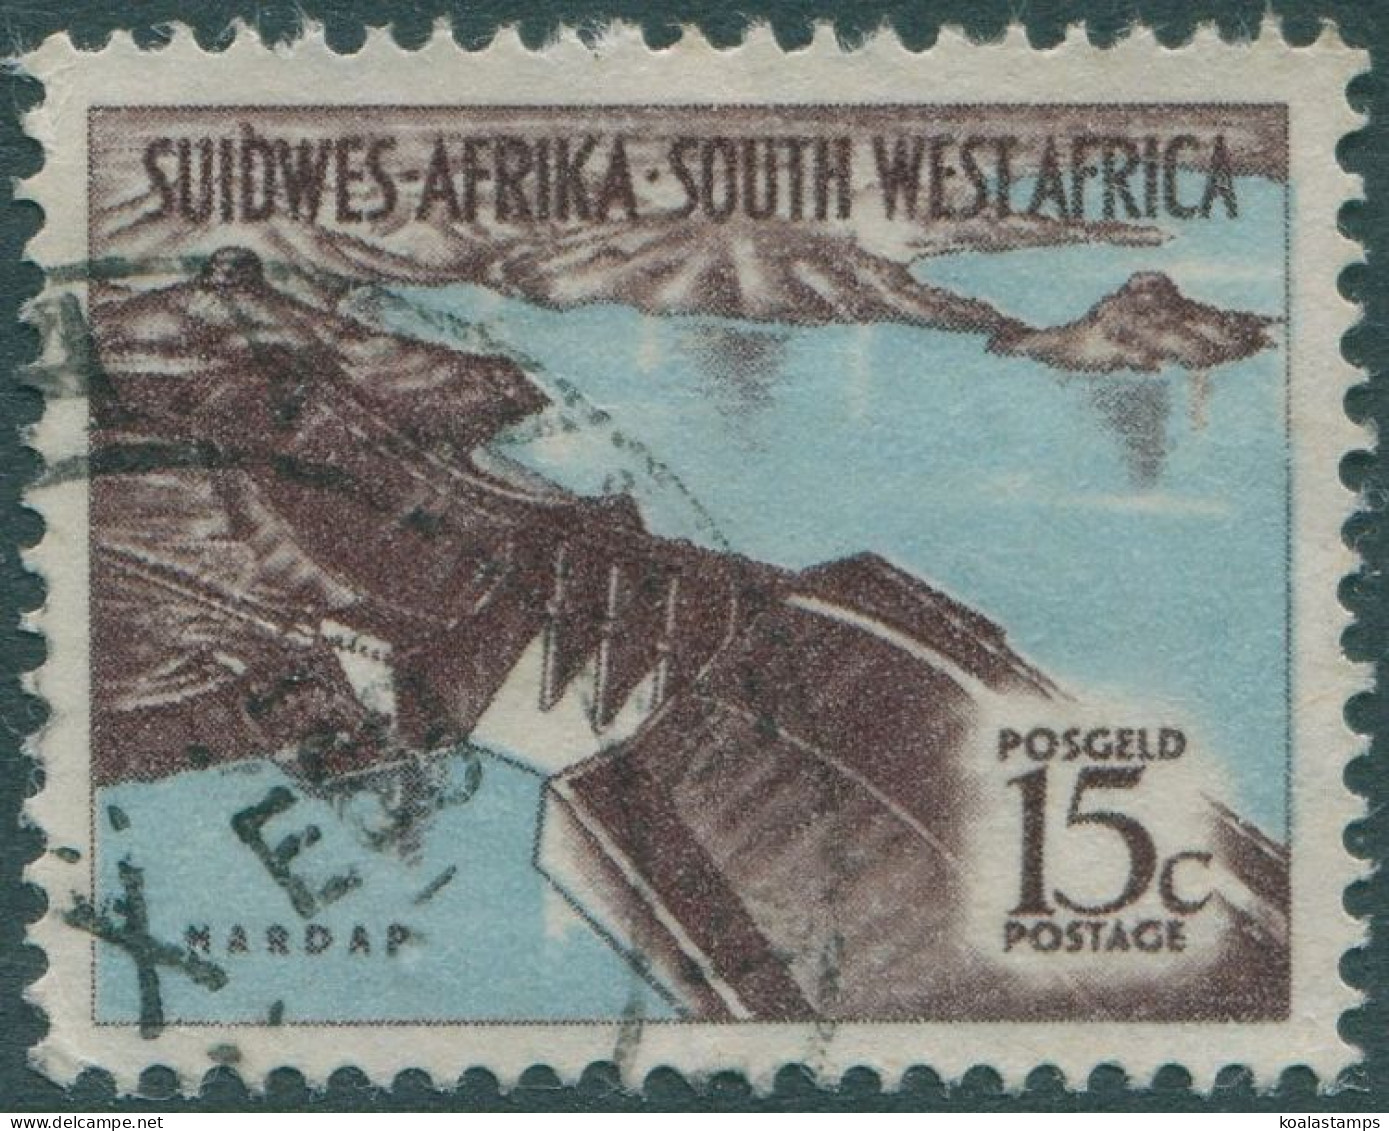 South West Africa 1961 SG182 15c Hardap Dam FU - Namibië (1990- ...)